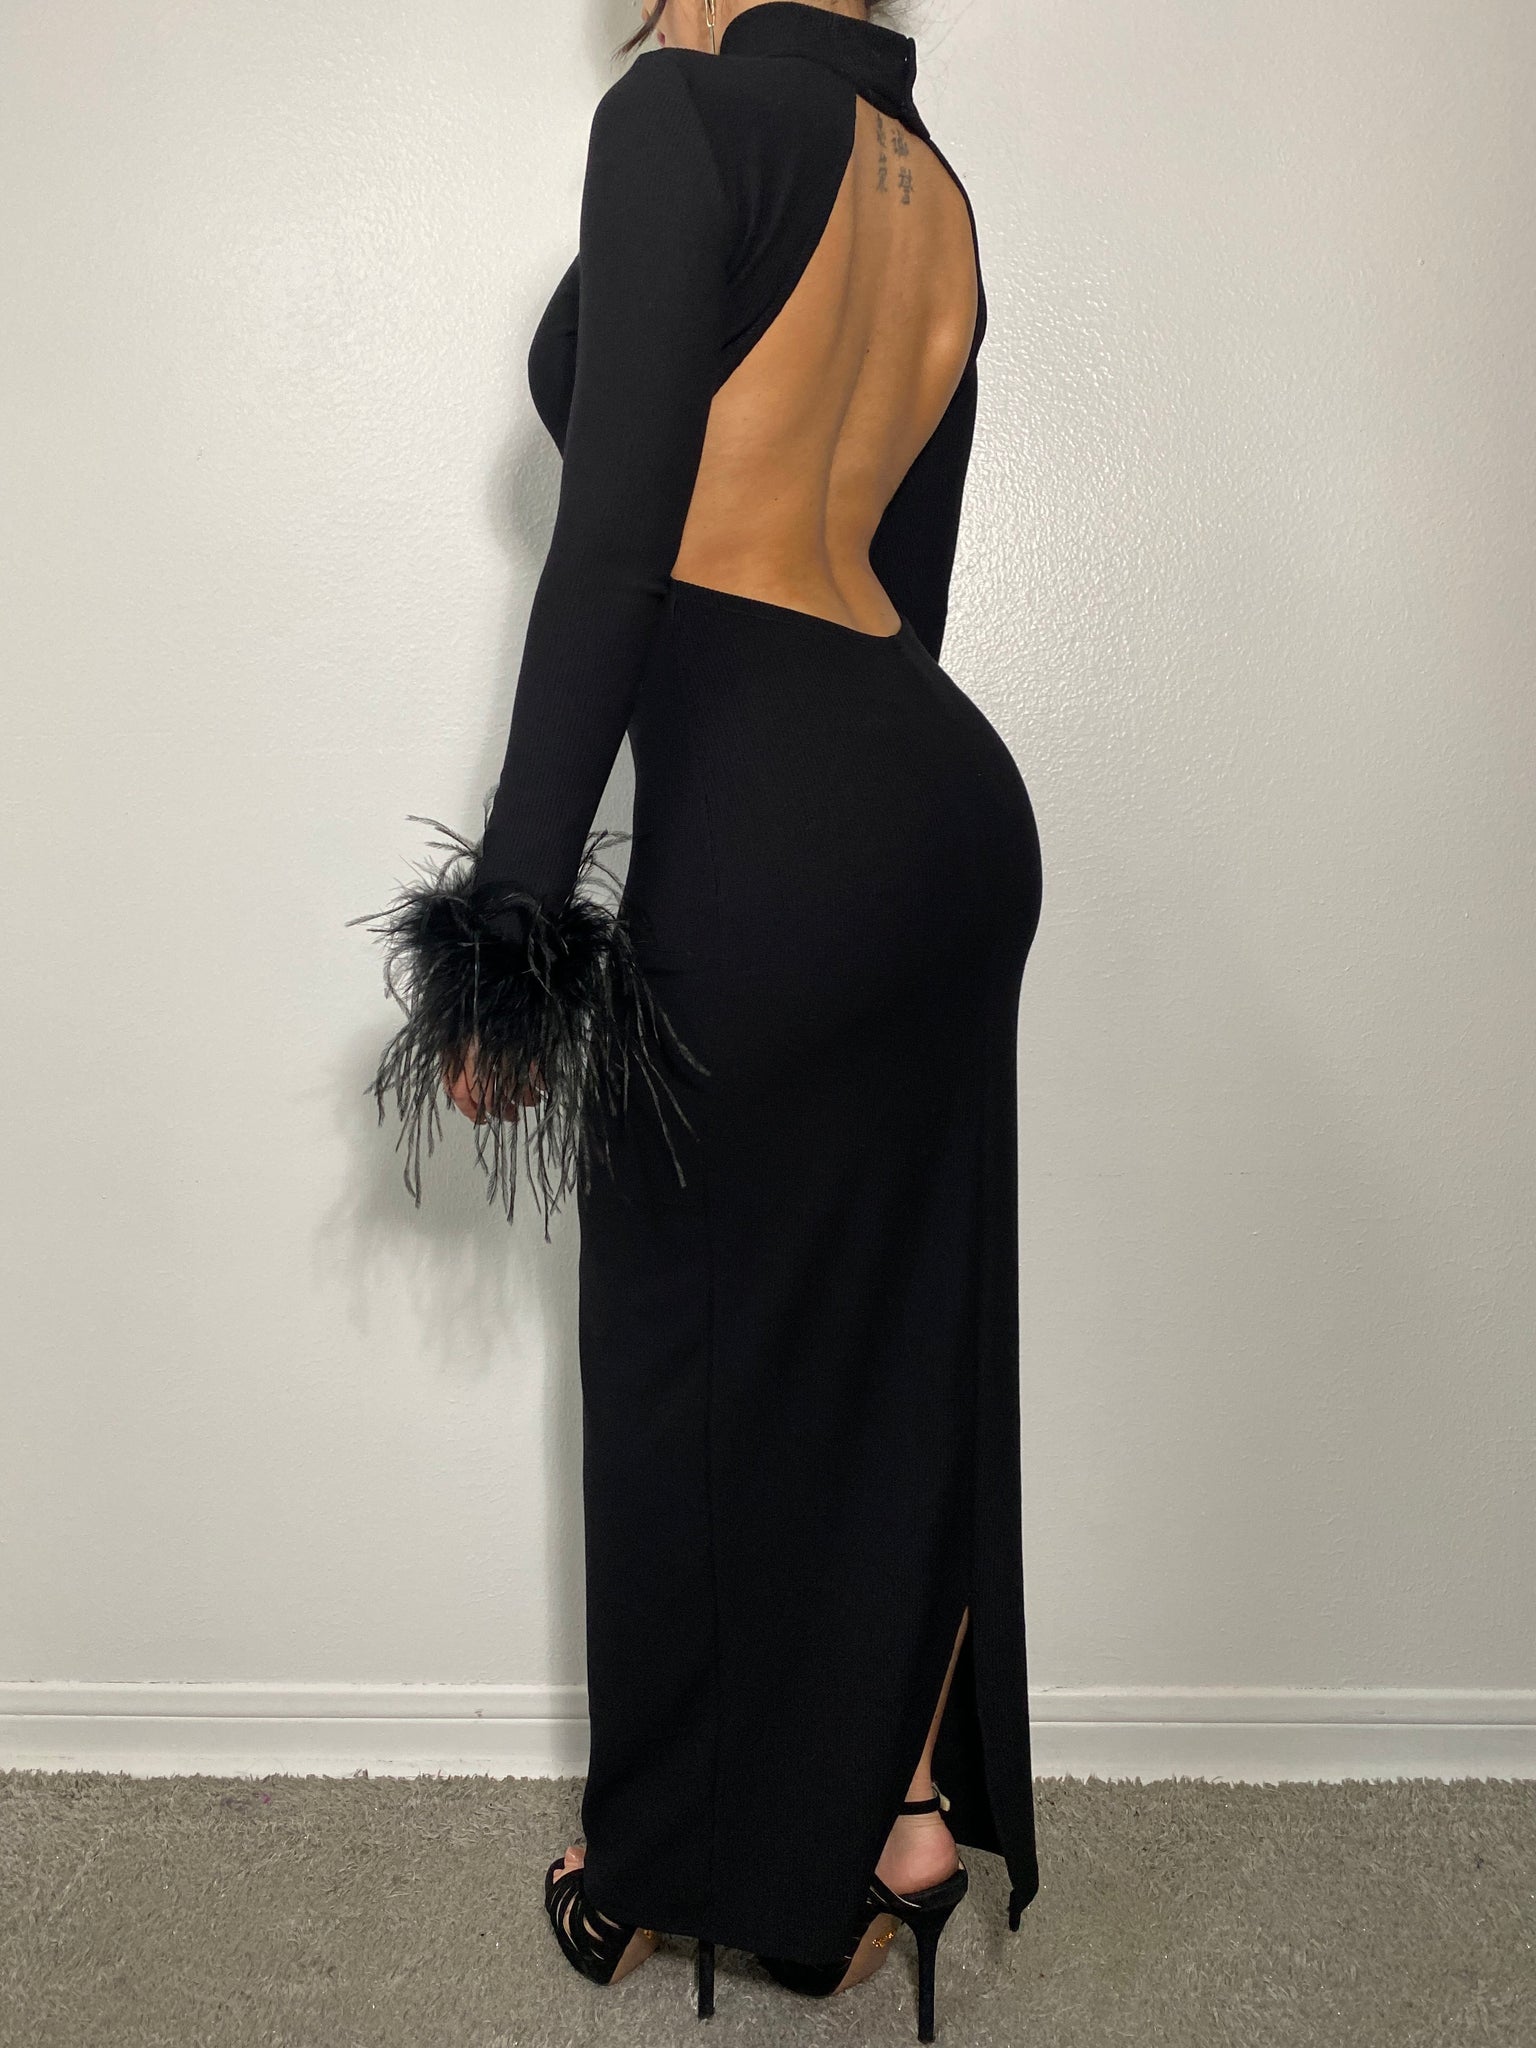 Allegra | Black backless dress, Black dress, Long party gowns